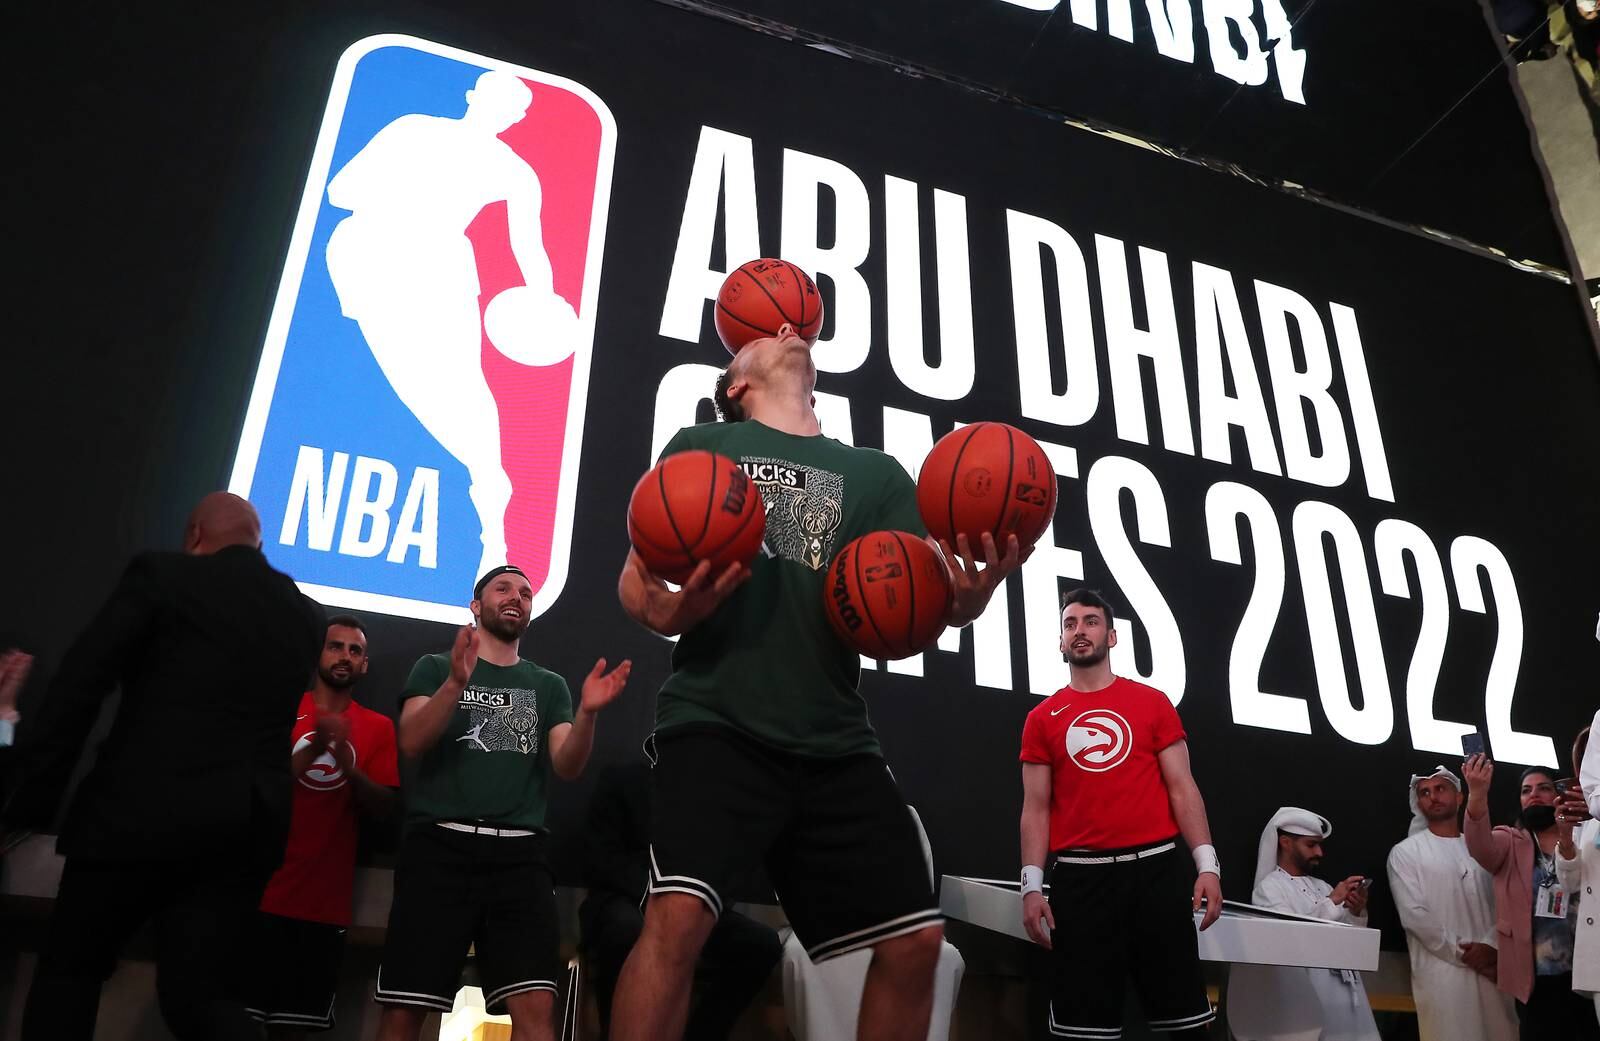 NBA District is coming to Manarat Al Saadiyat in Abu Dhabi